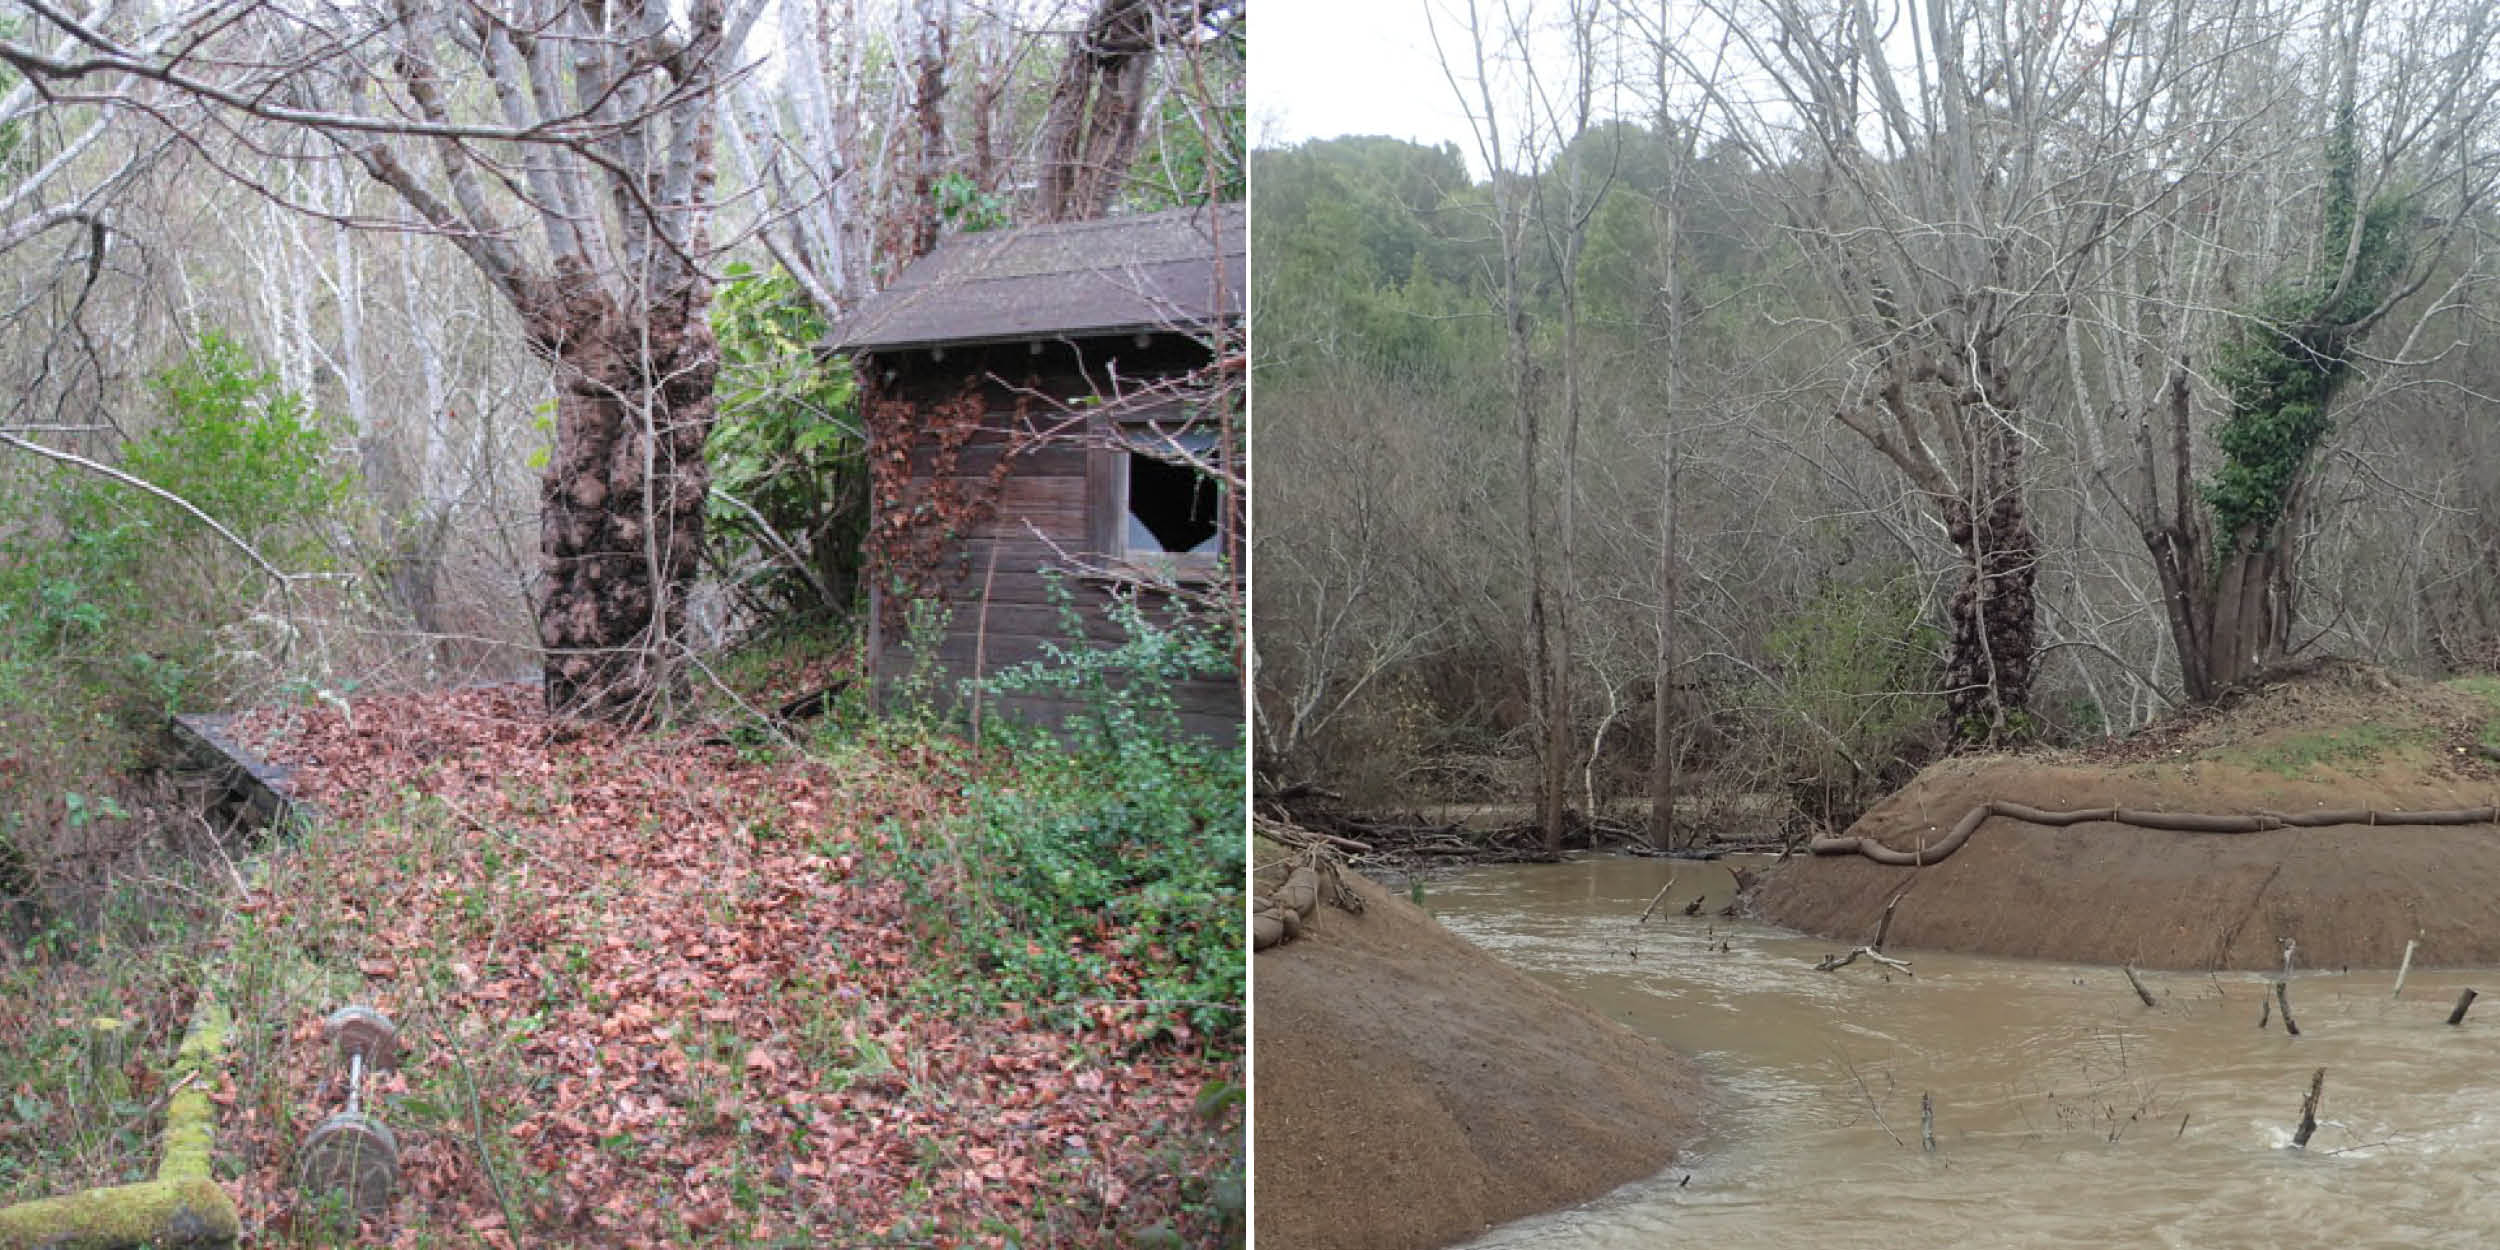 Before-and-After Photos Show Impressive Progress of Lagunitas Creek Restoration